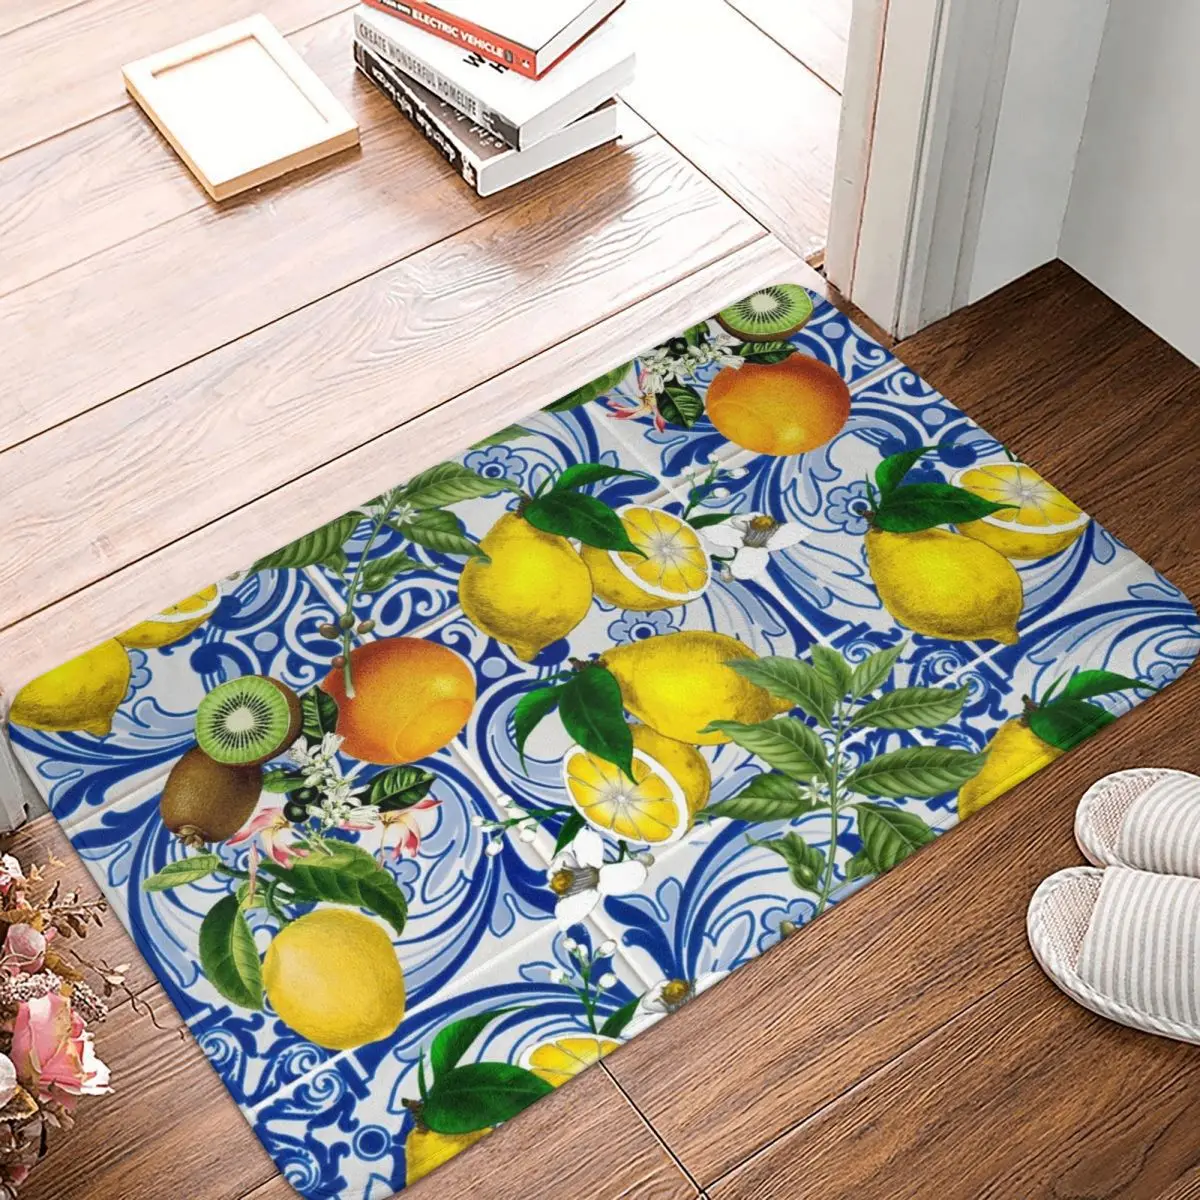 

Home Mediterranean Lemon On Blue Ceramic Tiles Doormat Mat Rug Anti-Slip Floor Decor Bath Bathroom Kitchen Carpet In The Hallway